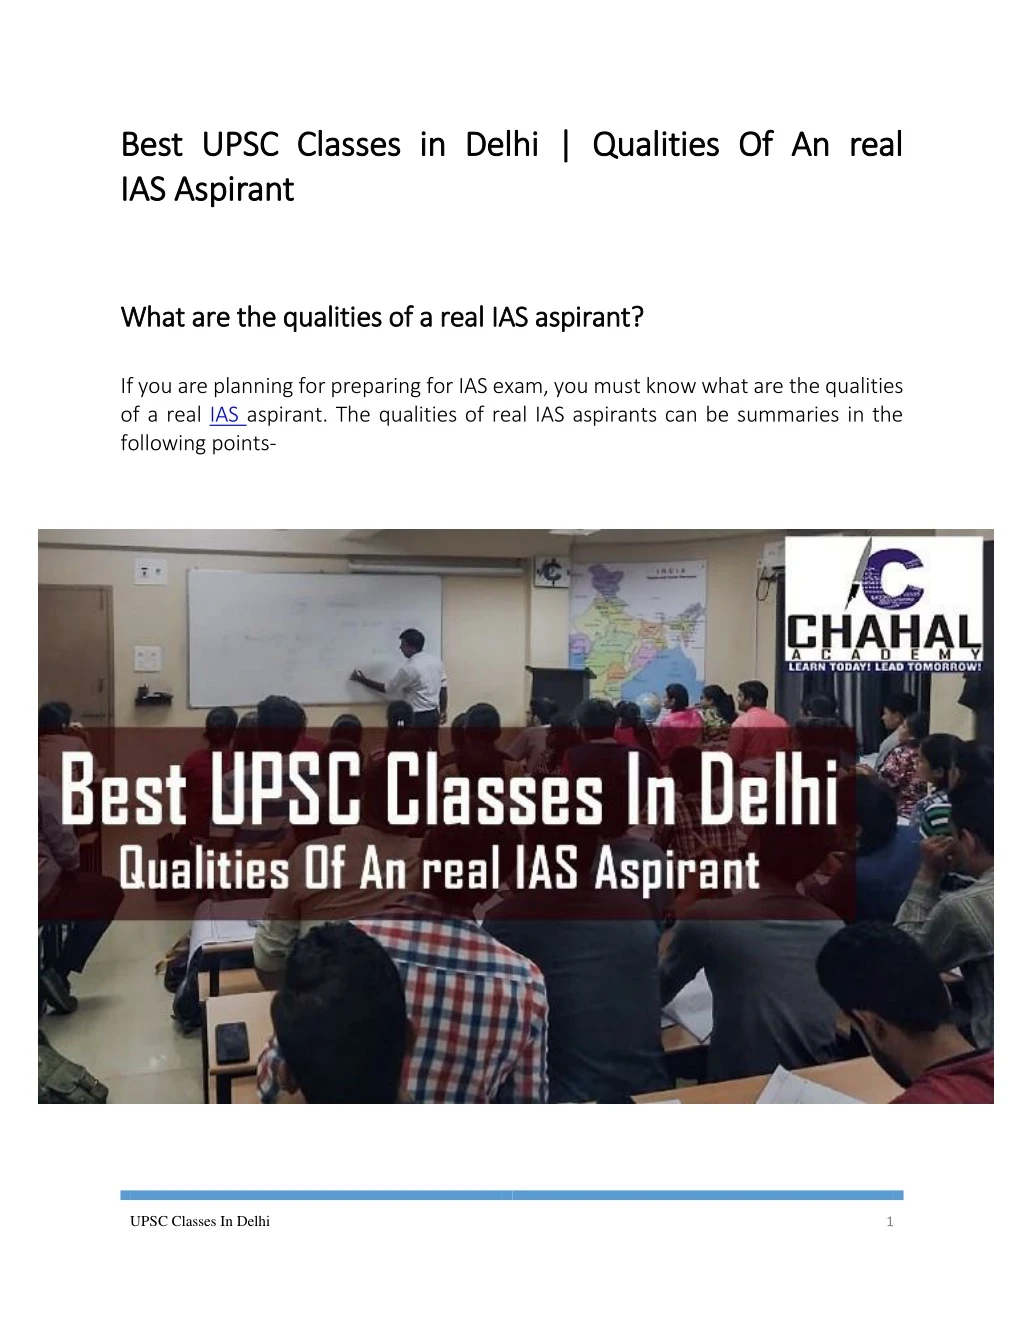 best upsc classes best upsc classes